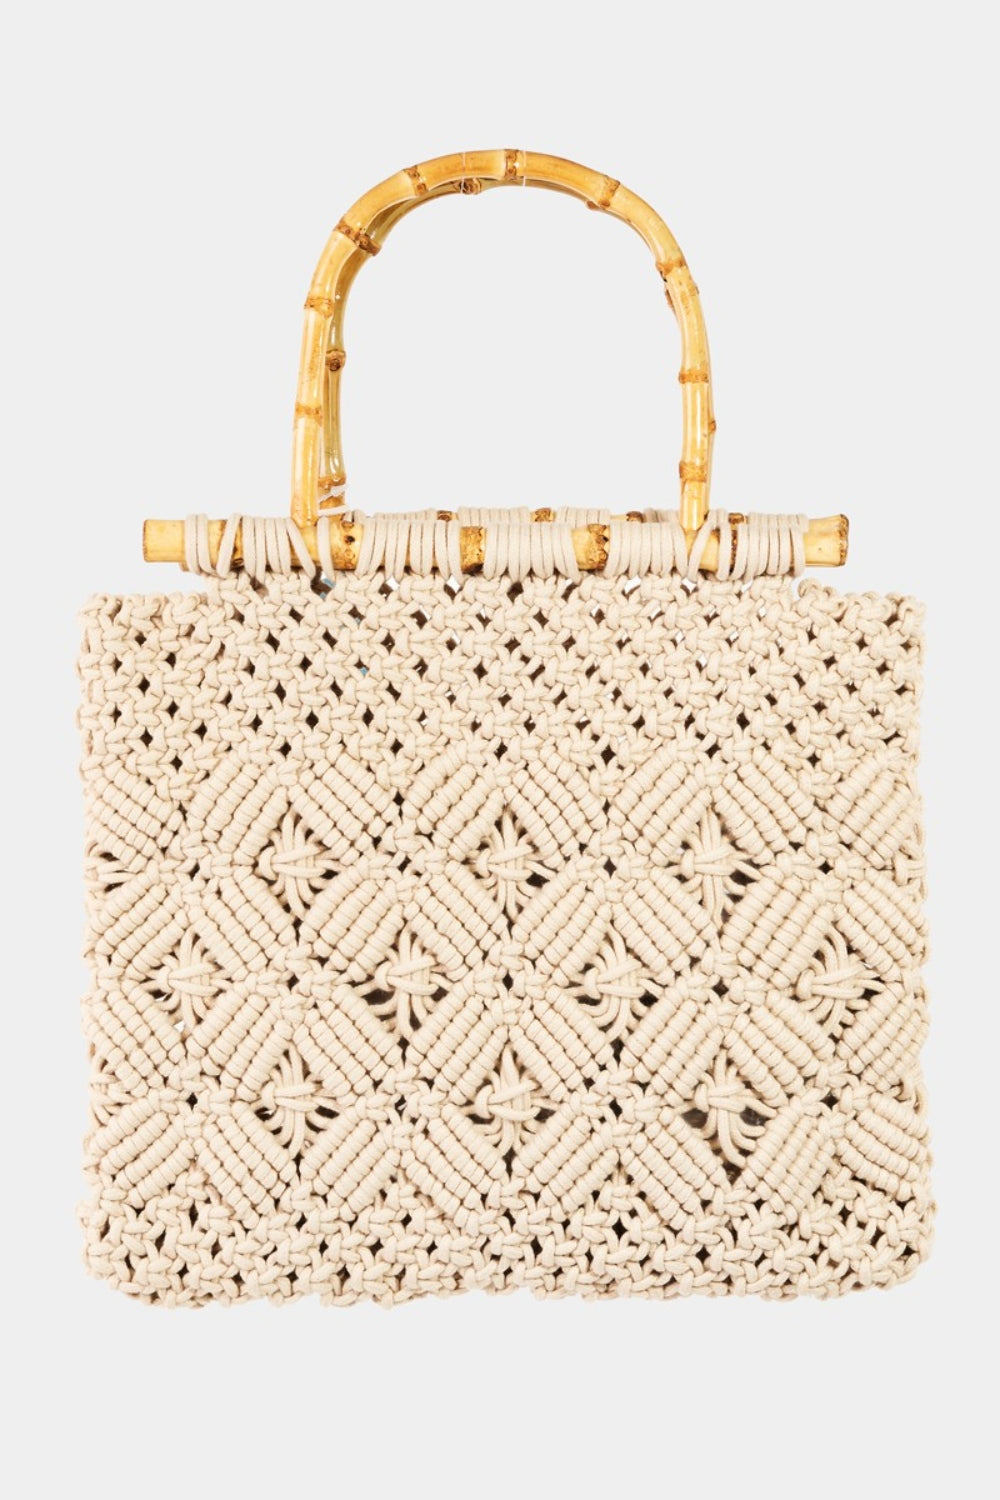 Fame Wooden Handle Braided Handbag  | KIKI COUTURE